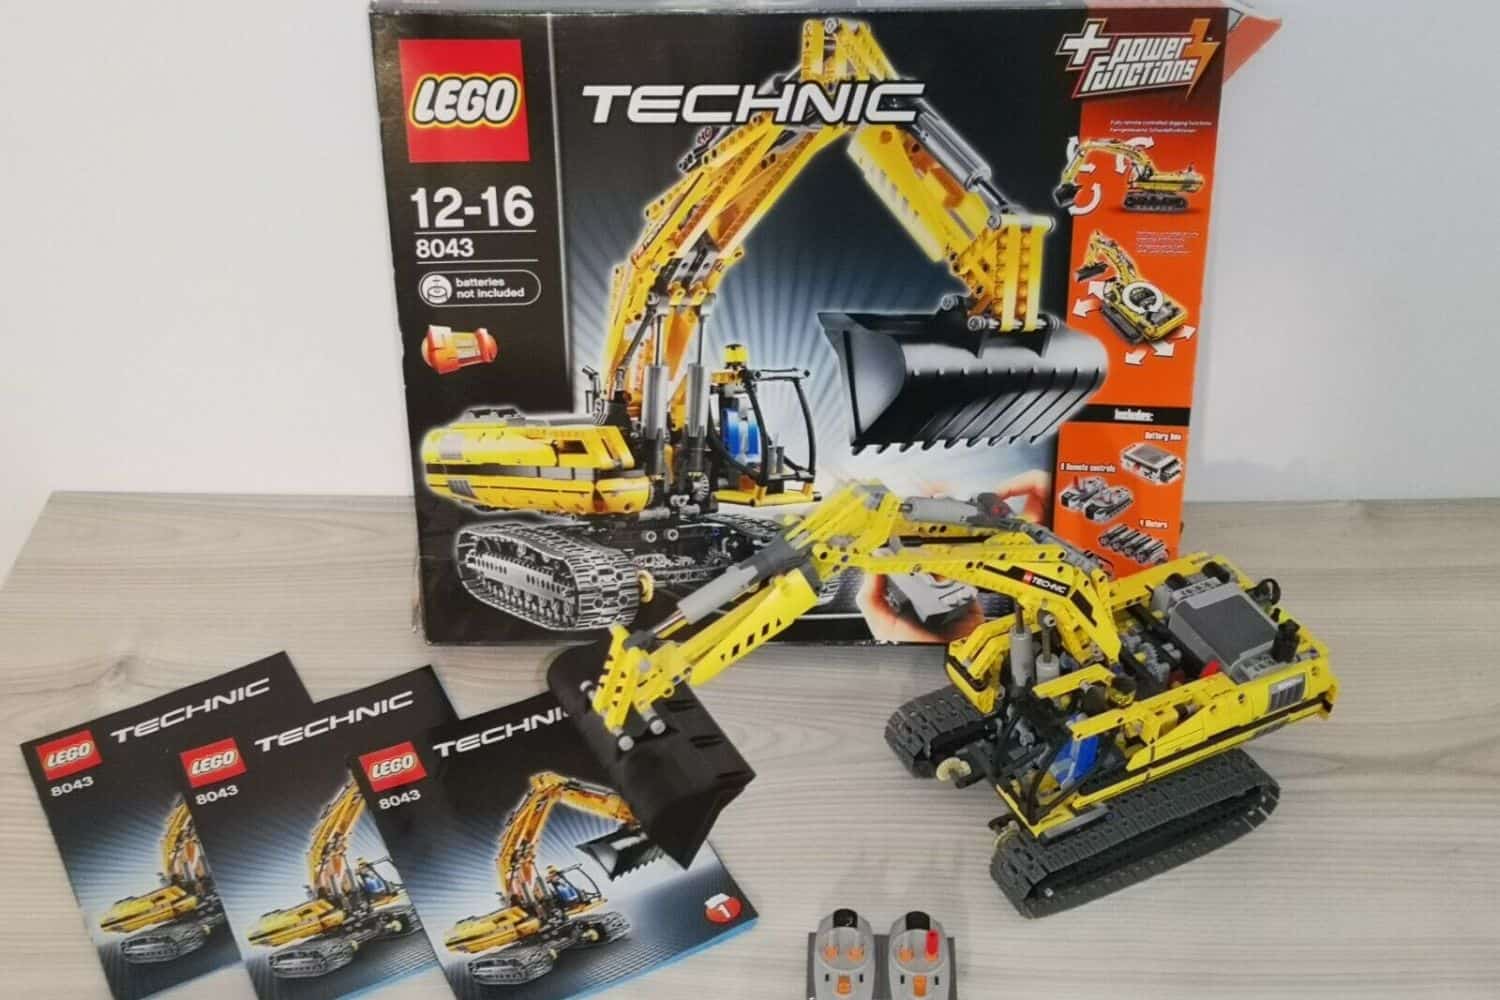 LEGO Technic Power Functions Motorized Excavator 8043